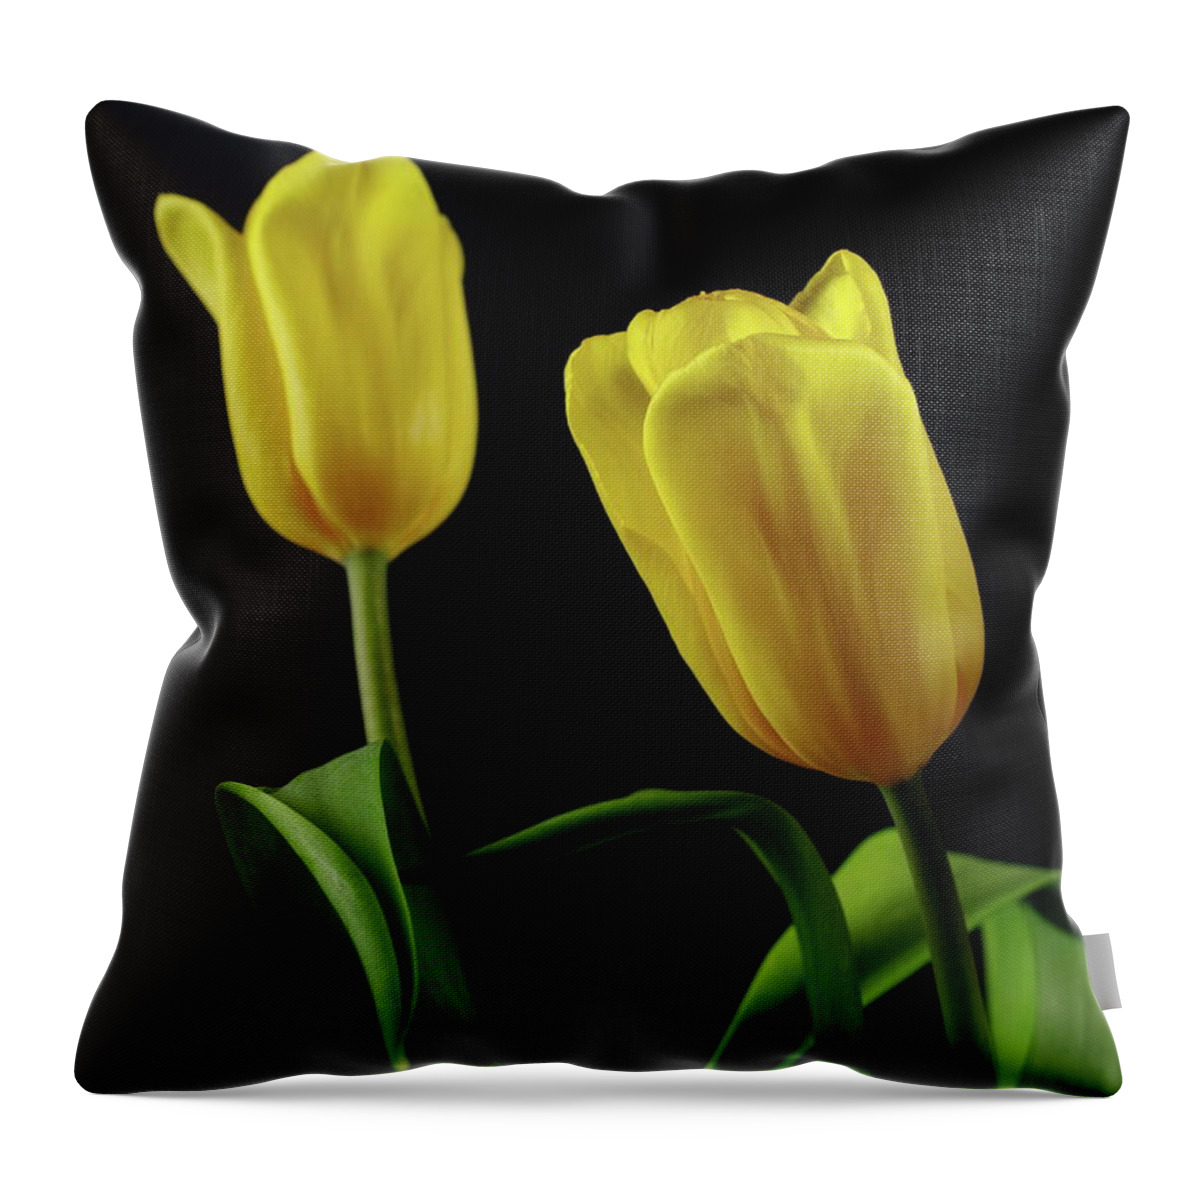 Tulip Throw Pillow featuring the photograph Yellow Tulips by Dariusz Gudowicz